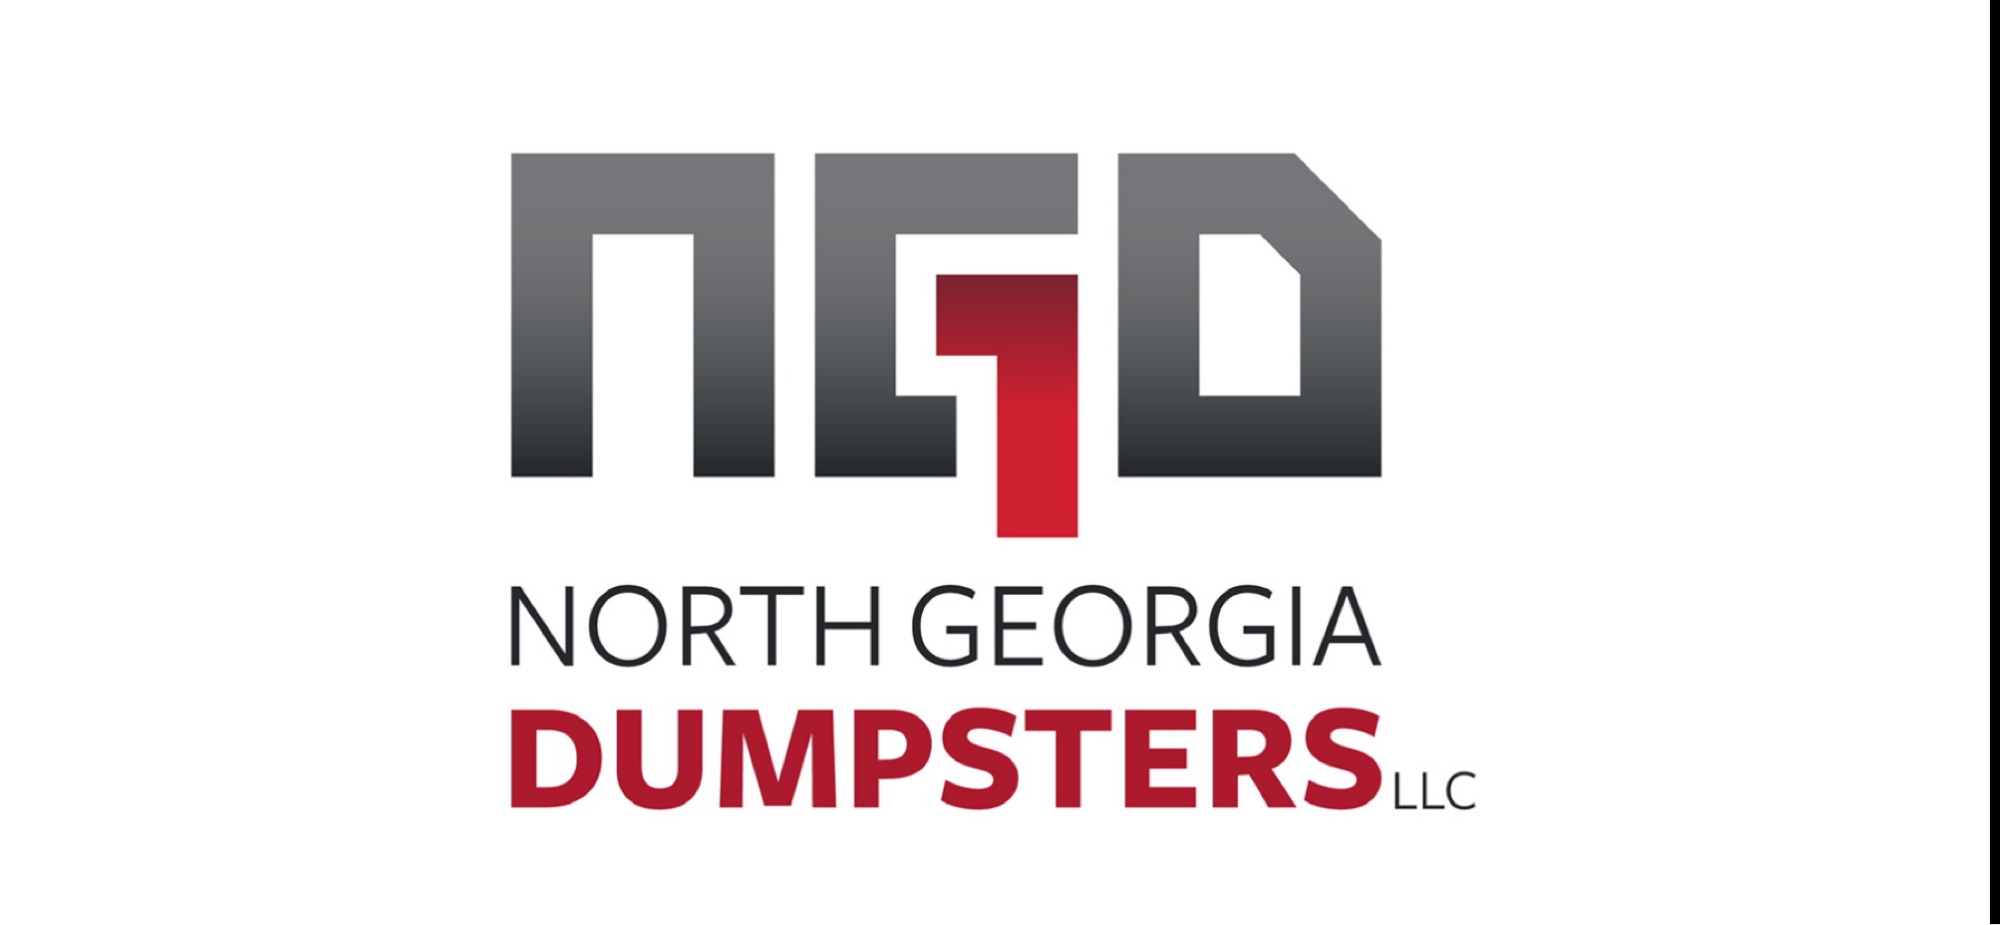 North Georgia Dumpsters, LLC Logo